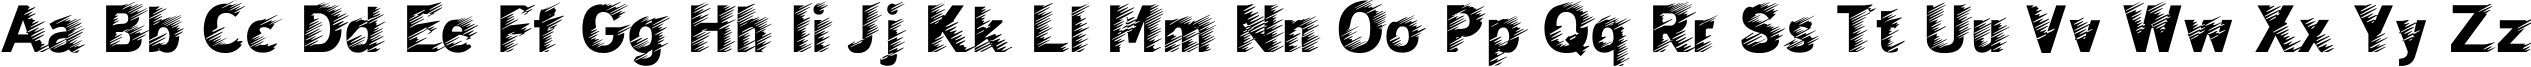 Пример написания английского алфавита шрифтом WindC